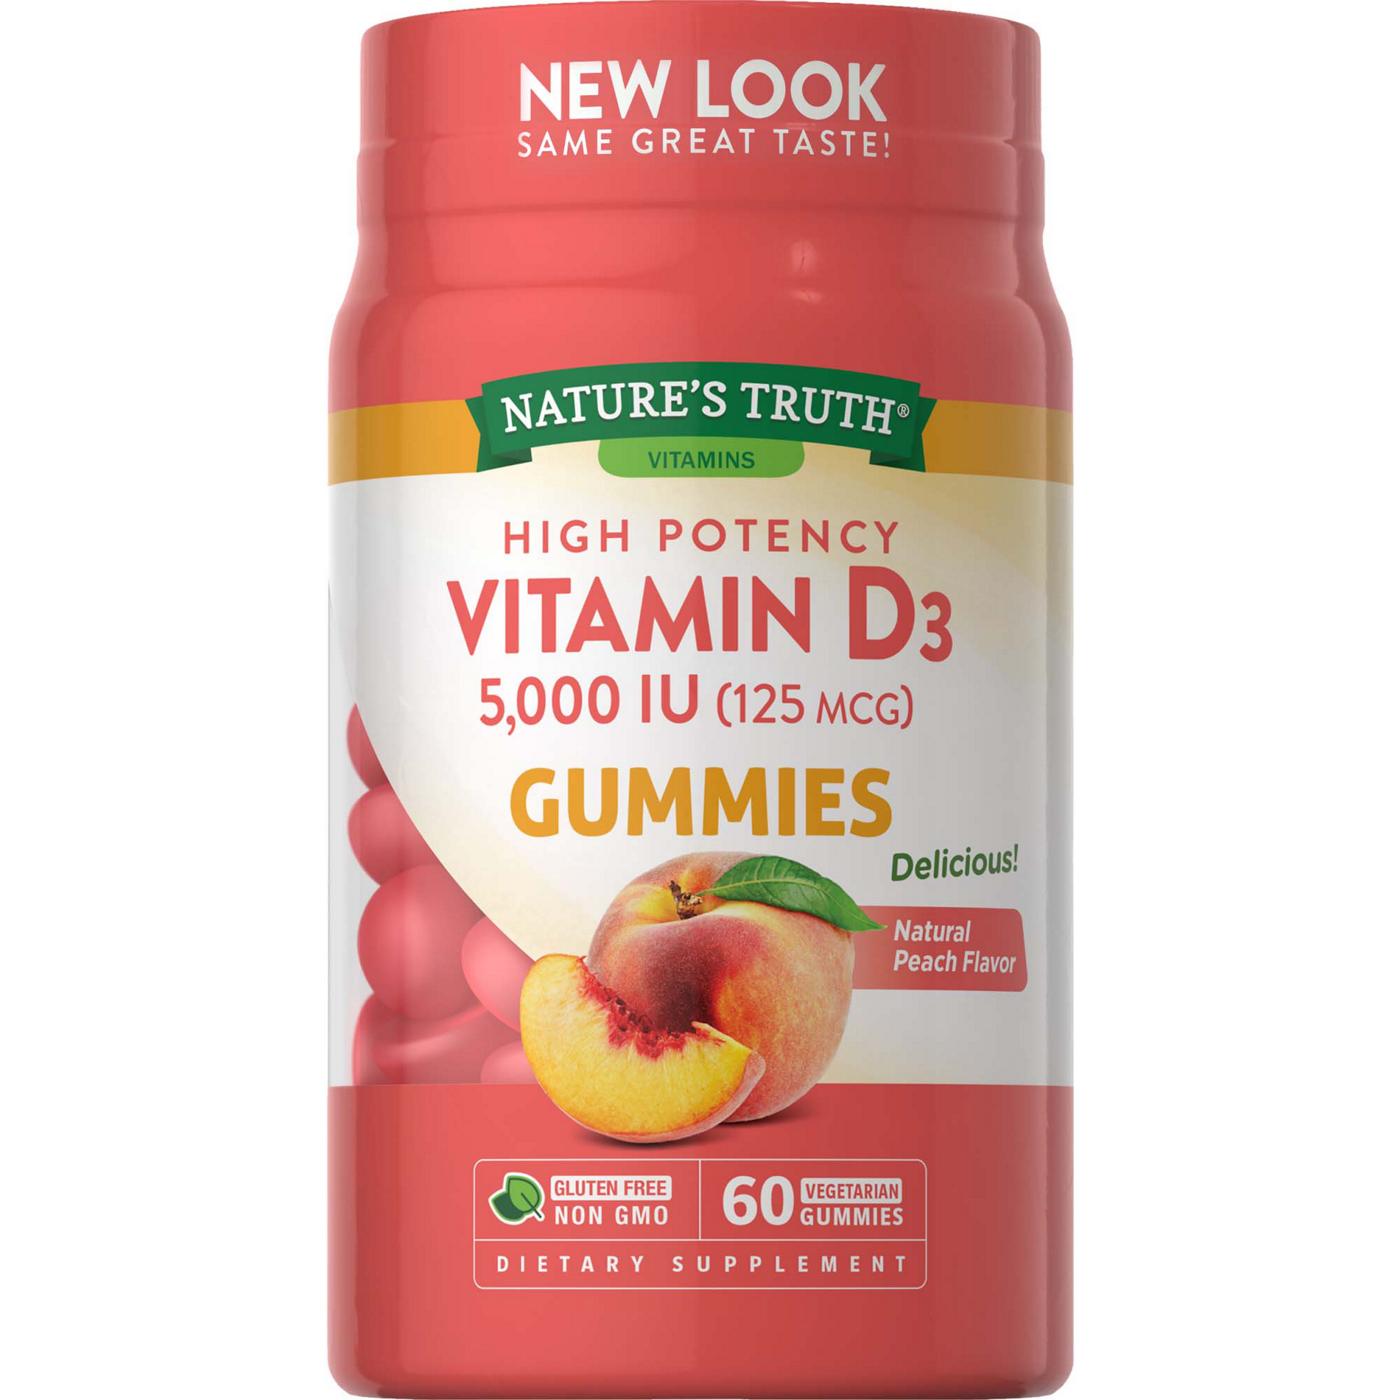 Nature's Truth High Potency Vitamin D3 Gummies - 5000 IU; image 1 of 2